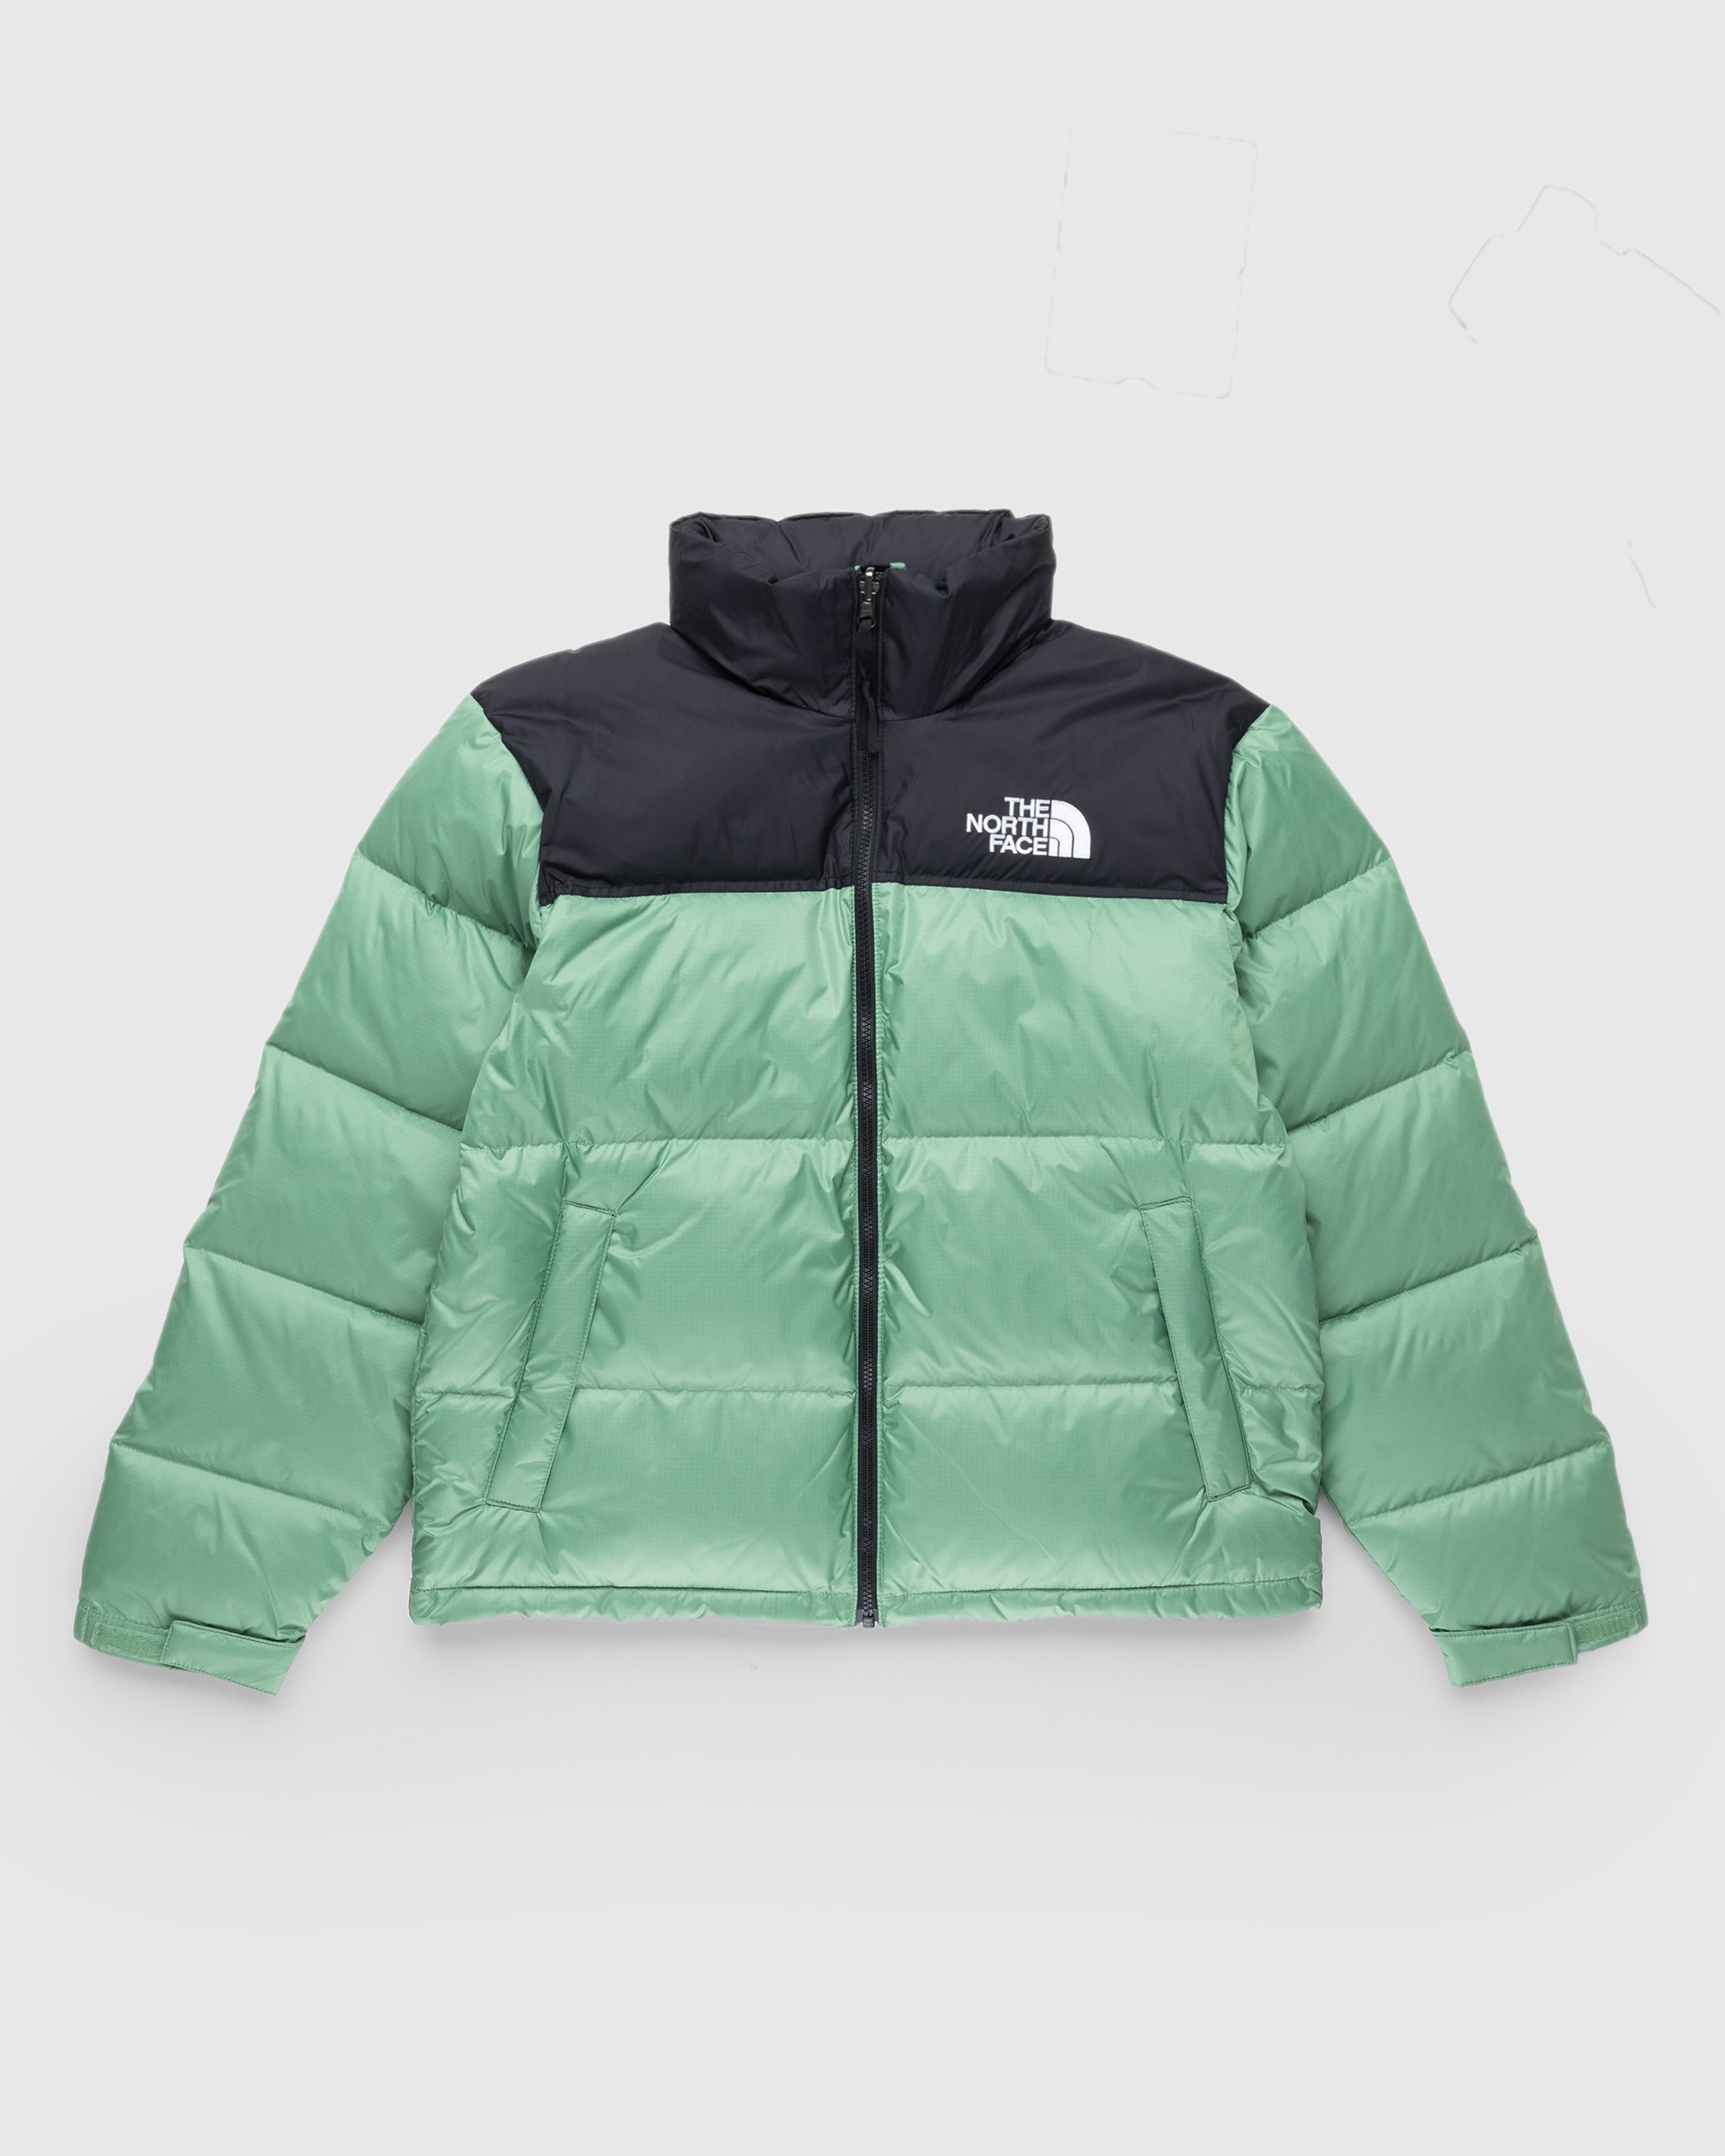 The North Face - 1996 Retro Nuptse Jacket Deep Grass Green - Clothing - Green - Image 1